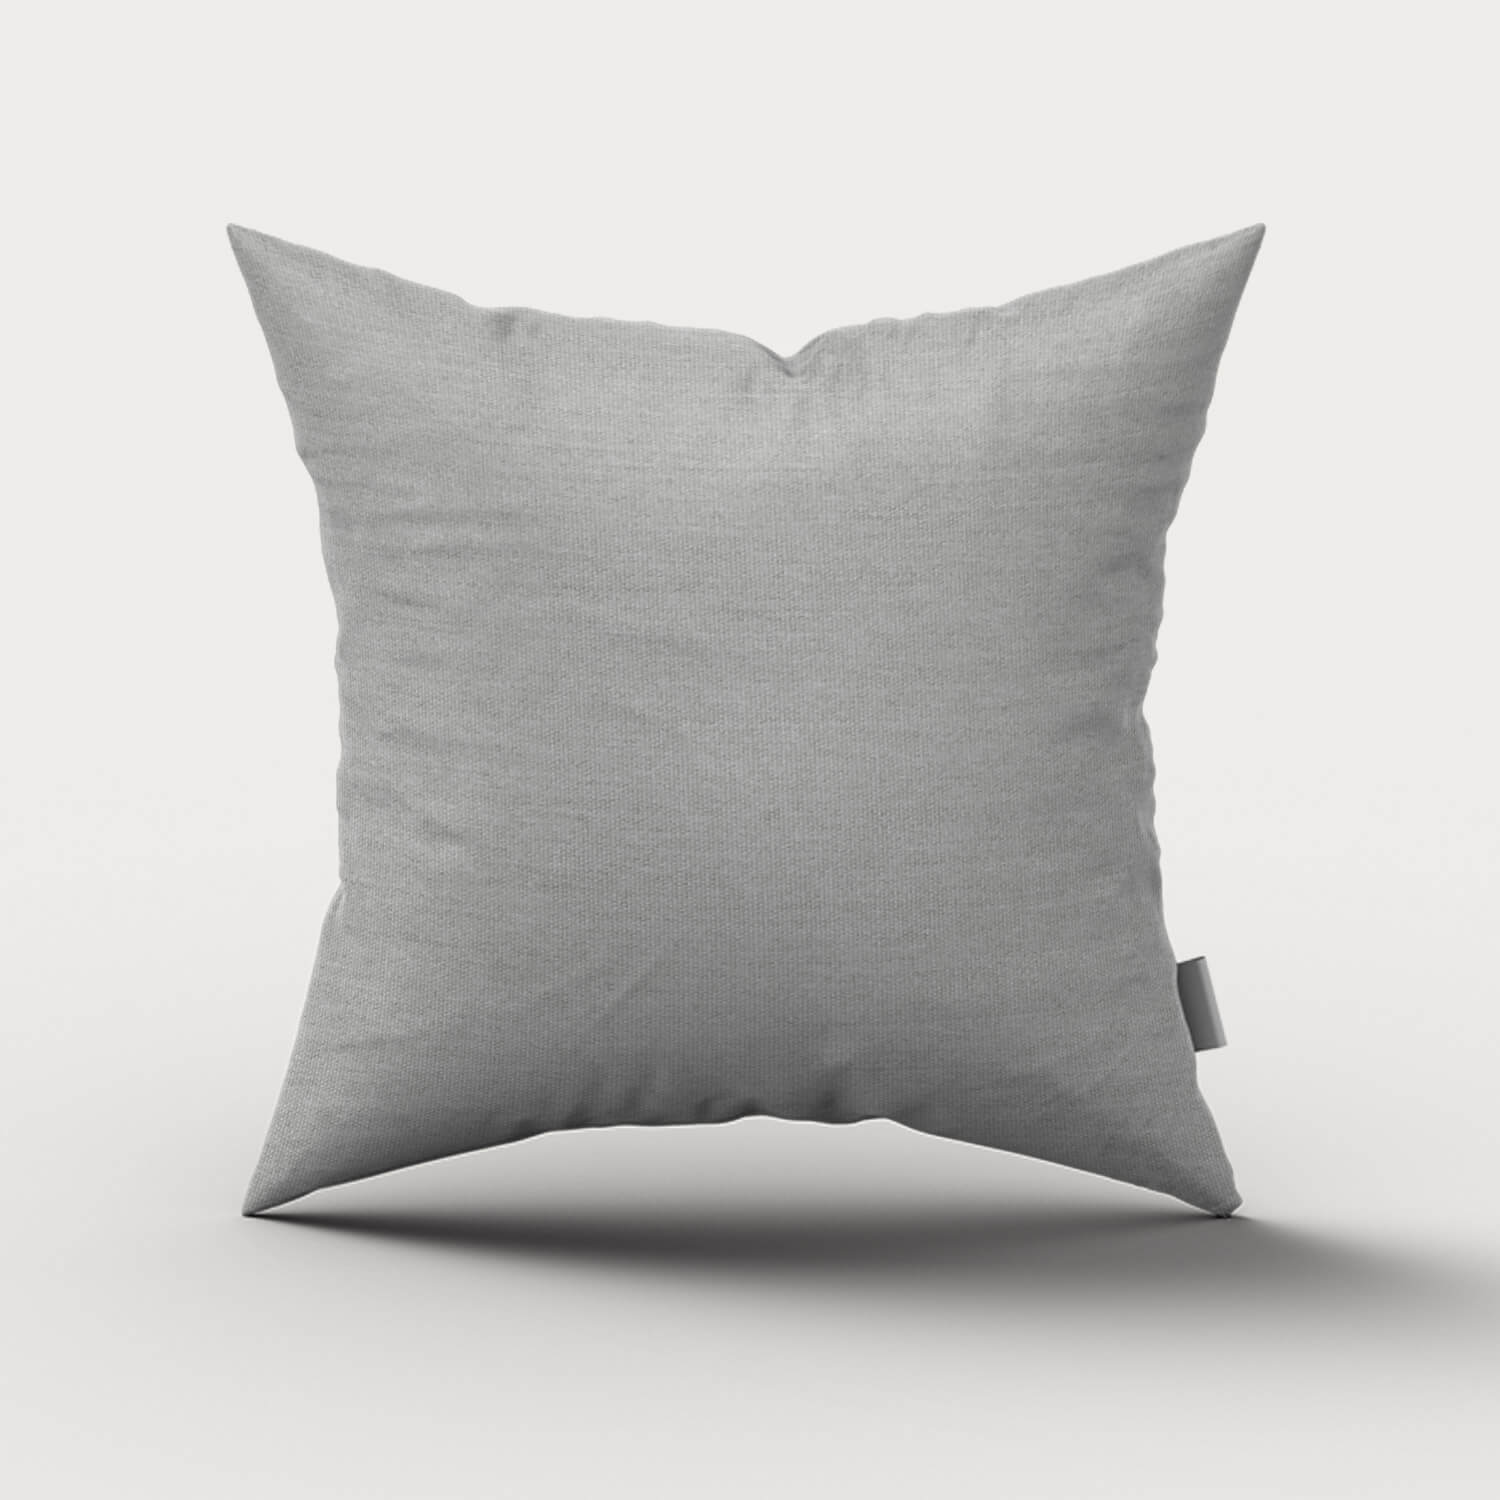 PENGI Waterproof Outdoor Pillow Case 1 Pcs - Mix Glacier Gray